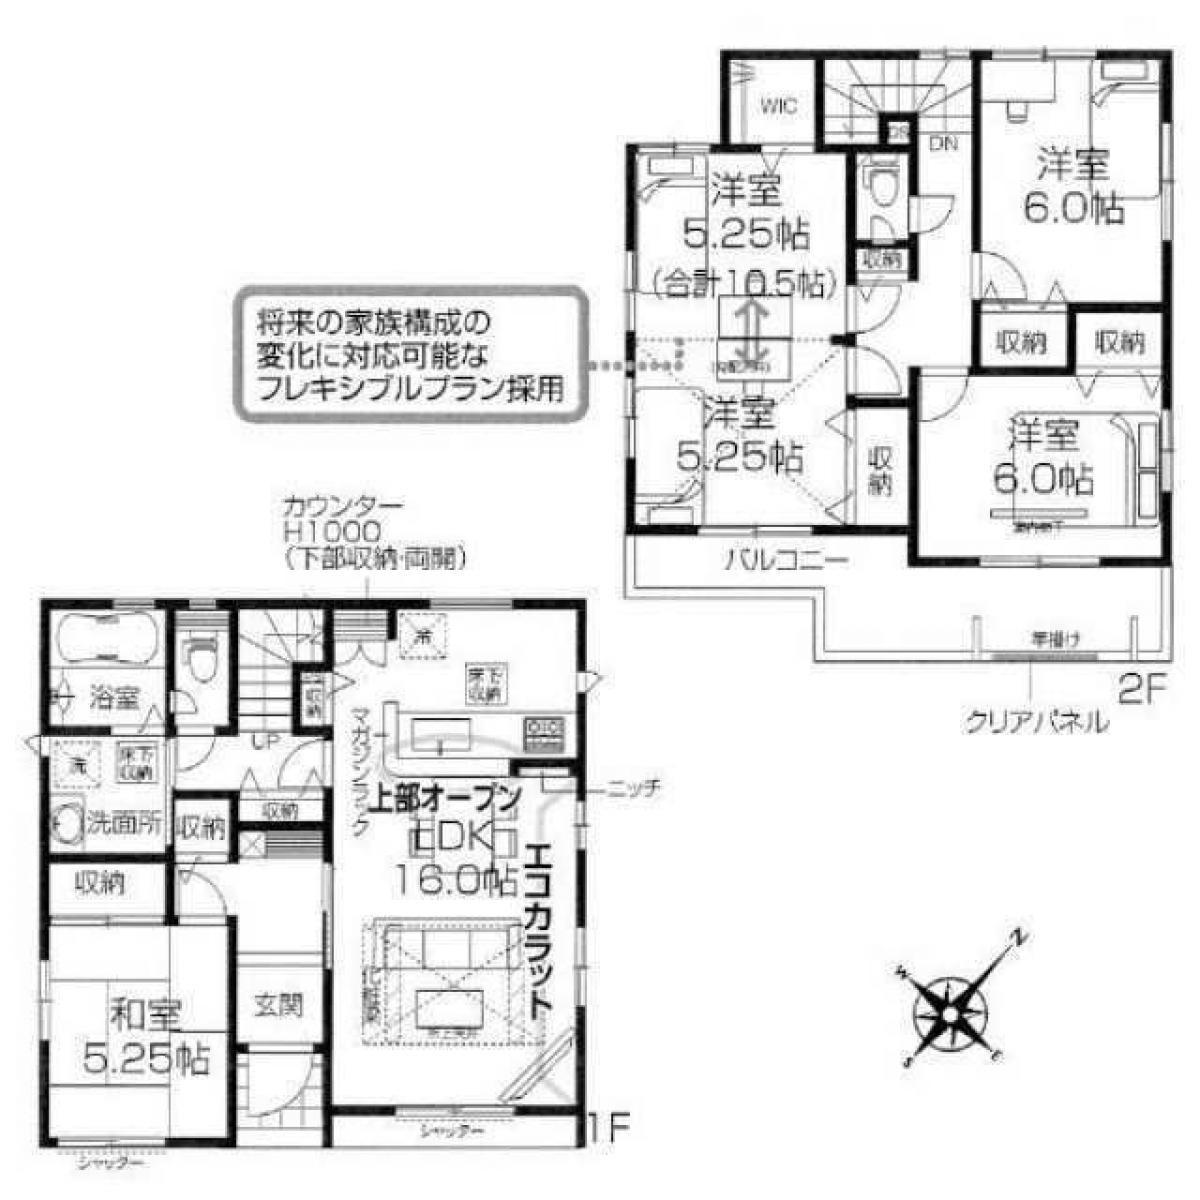 Picture of Home For Sale in Shiki Shi, Saitama, Japan